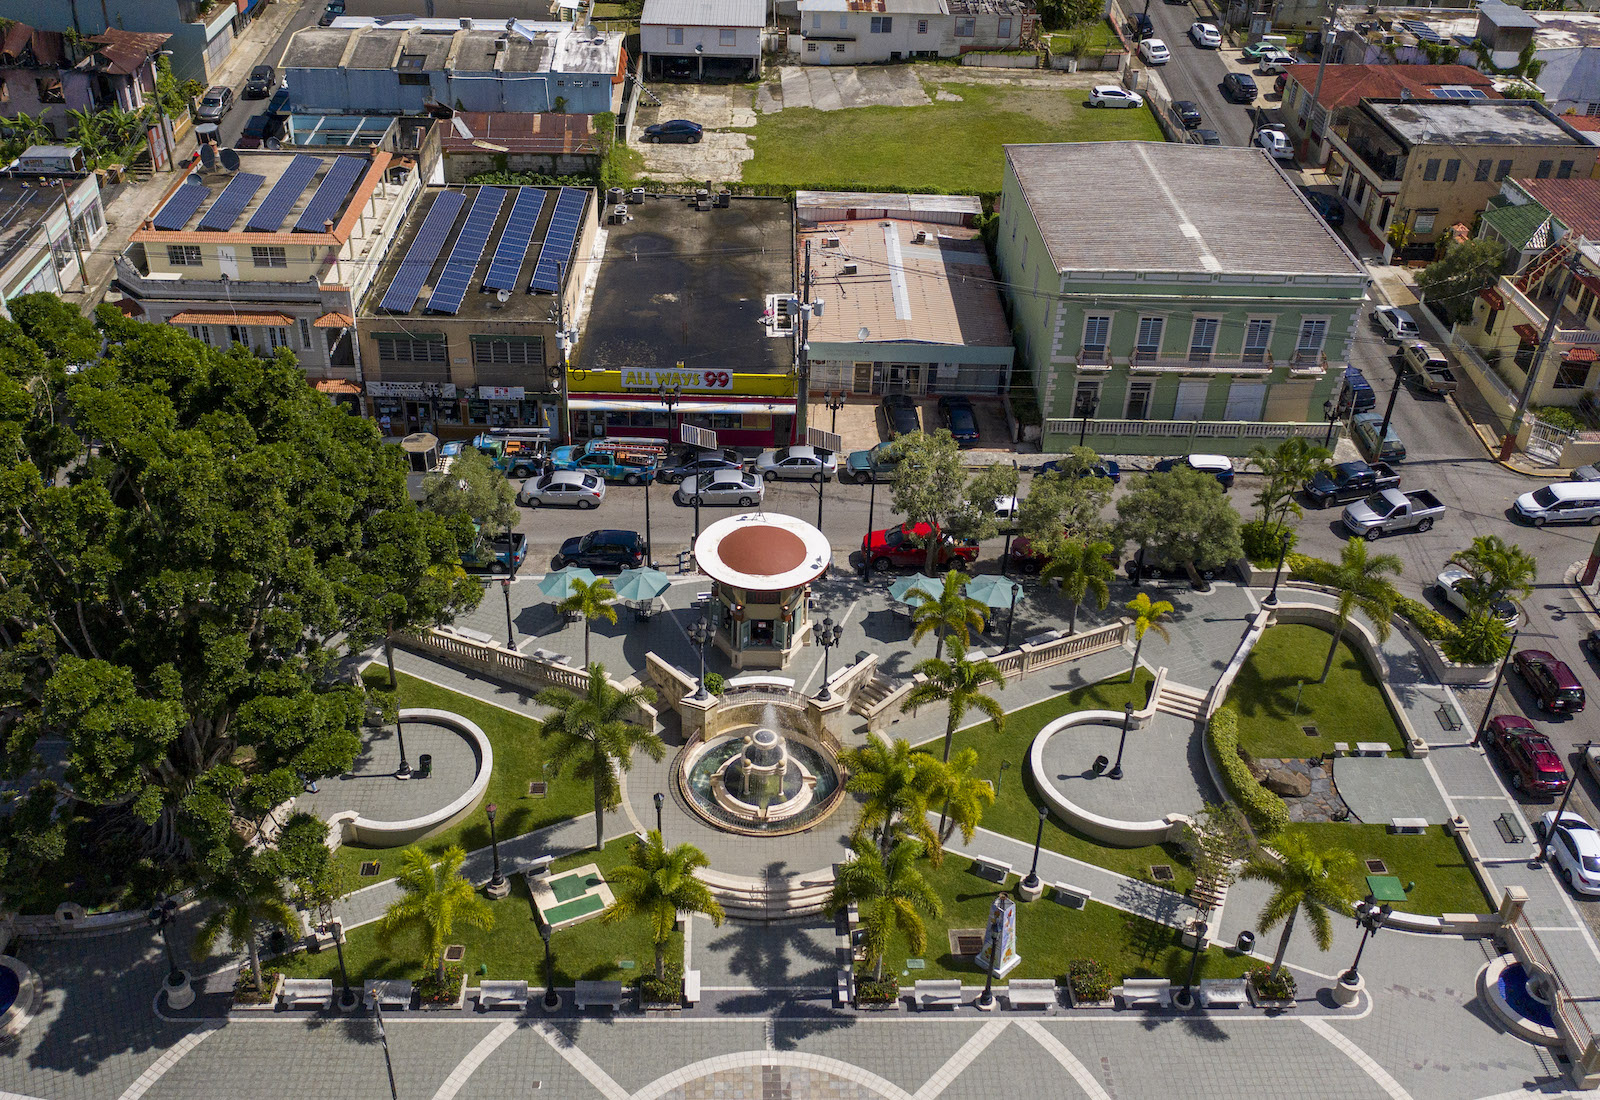 Aerial view of Adjuntas' central plaza